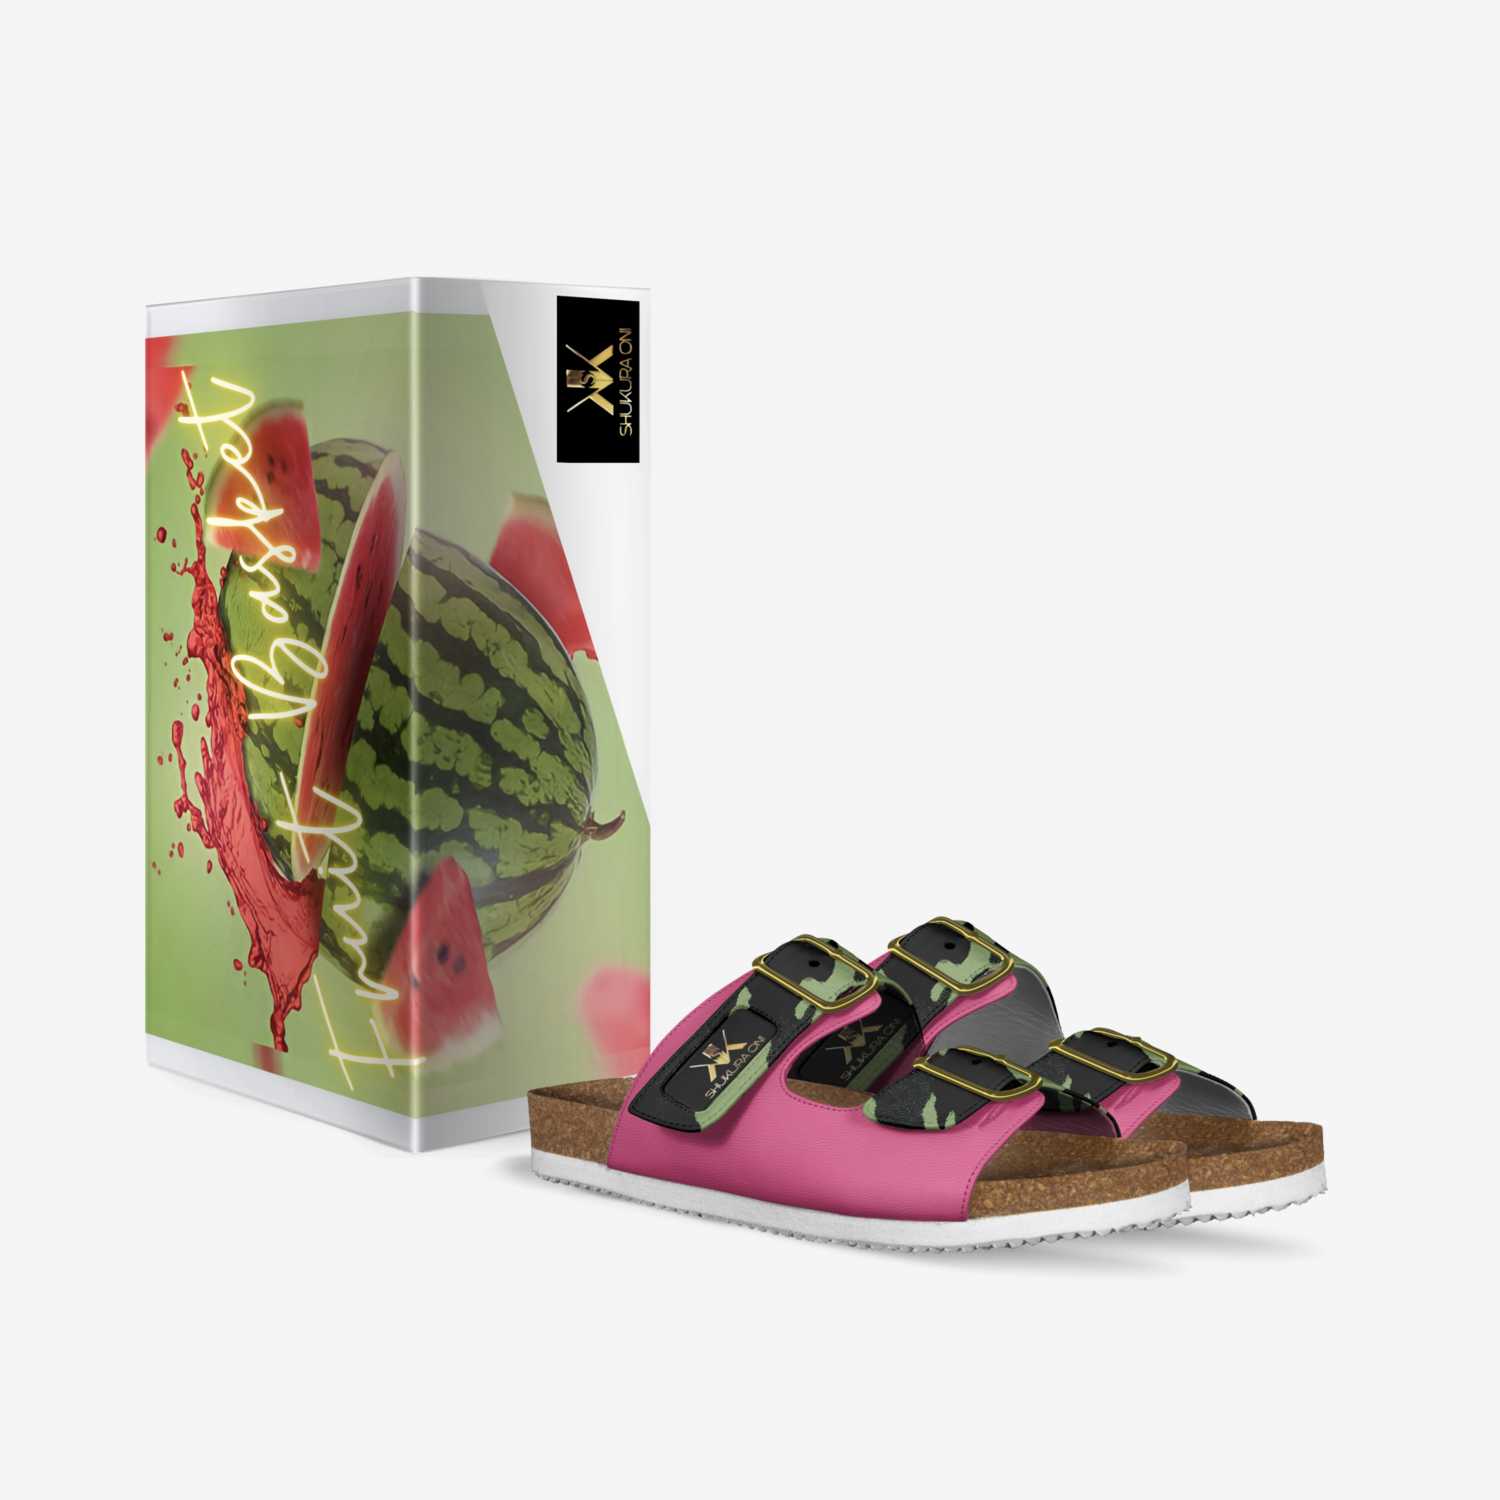 Watermelon custom made in Italy shoes by Shukura Oni | Box view